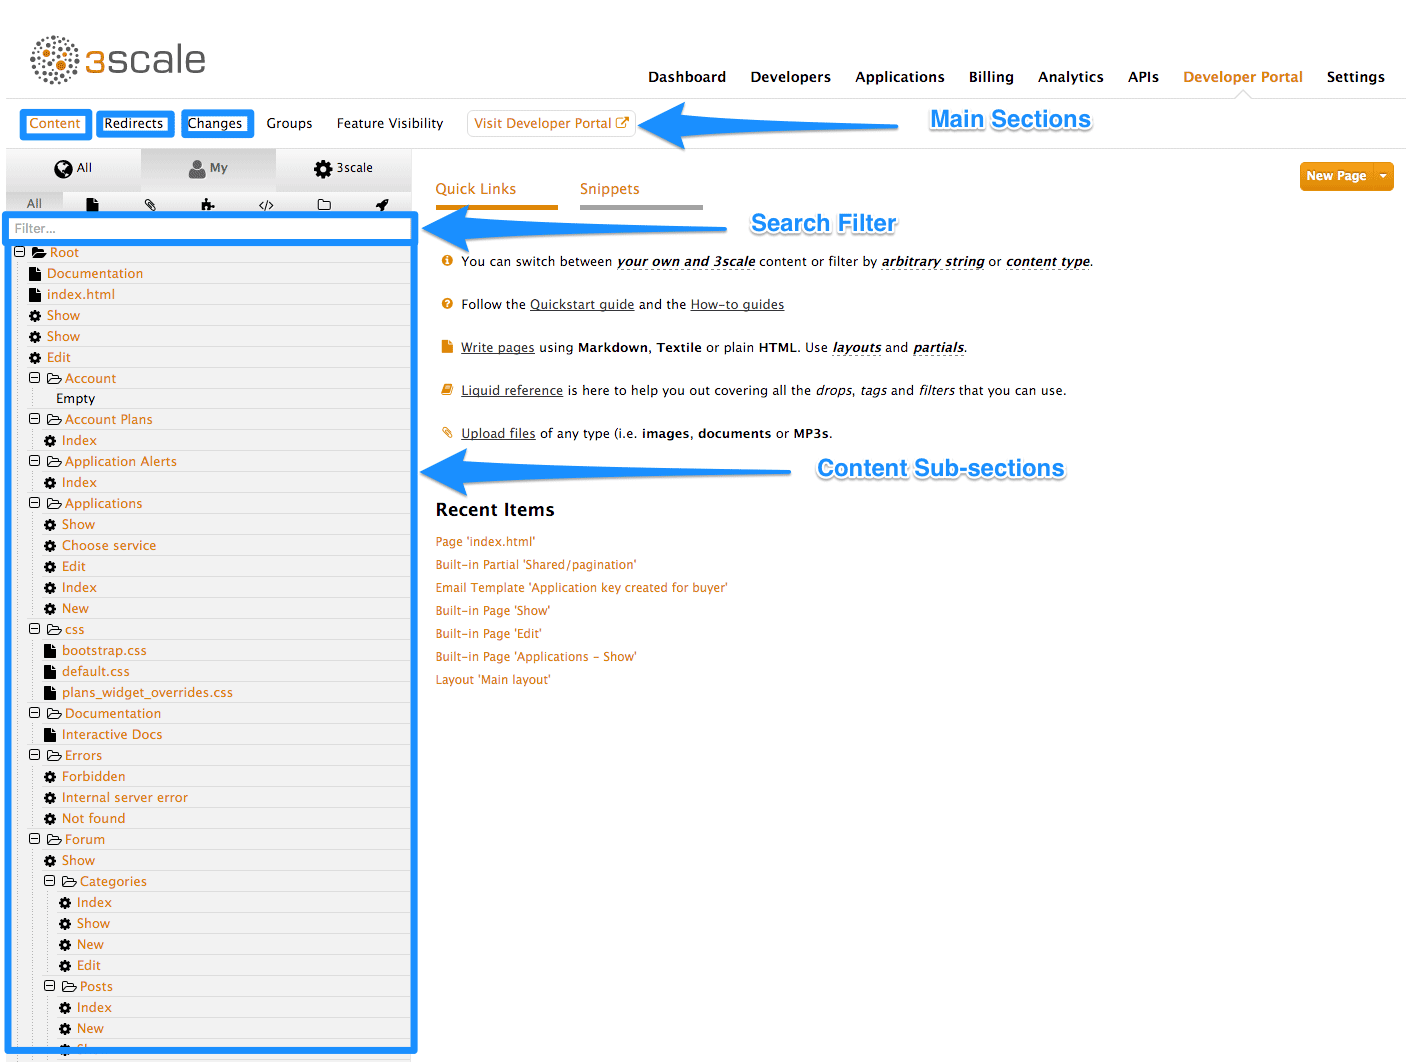 Developer portal page overview